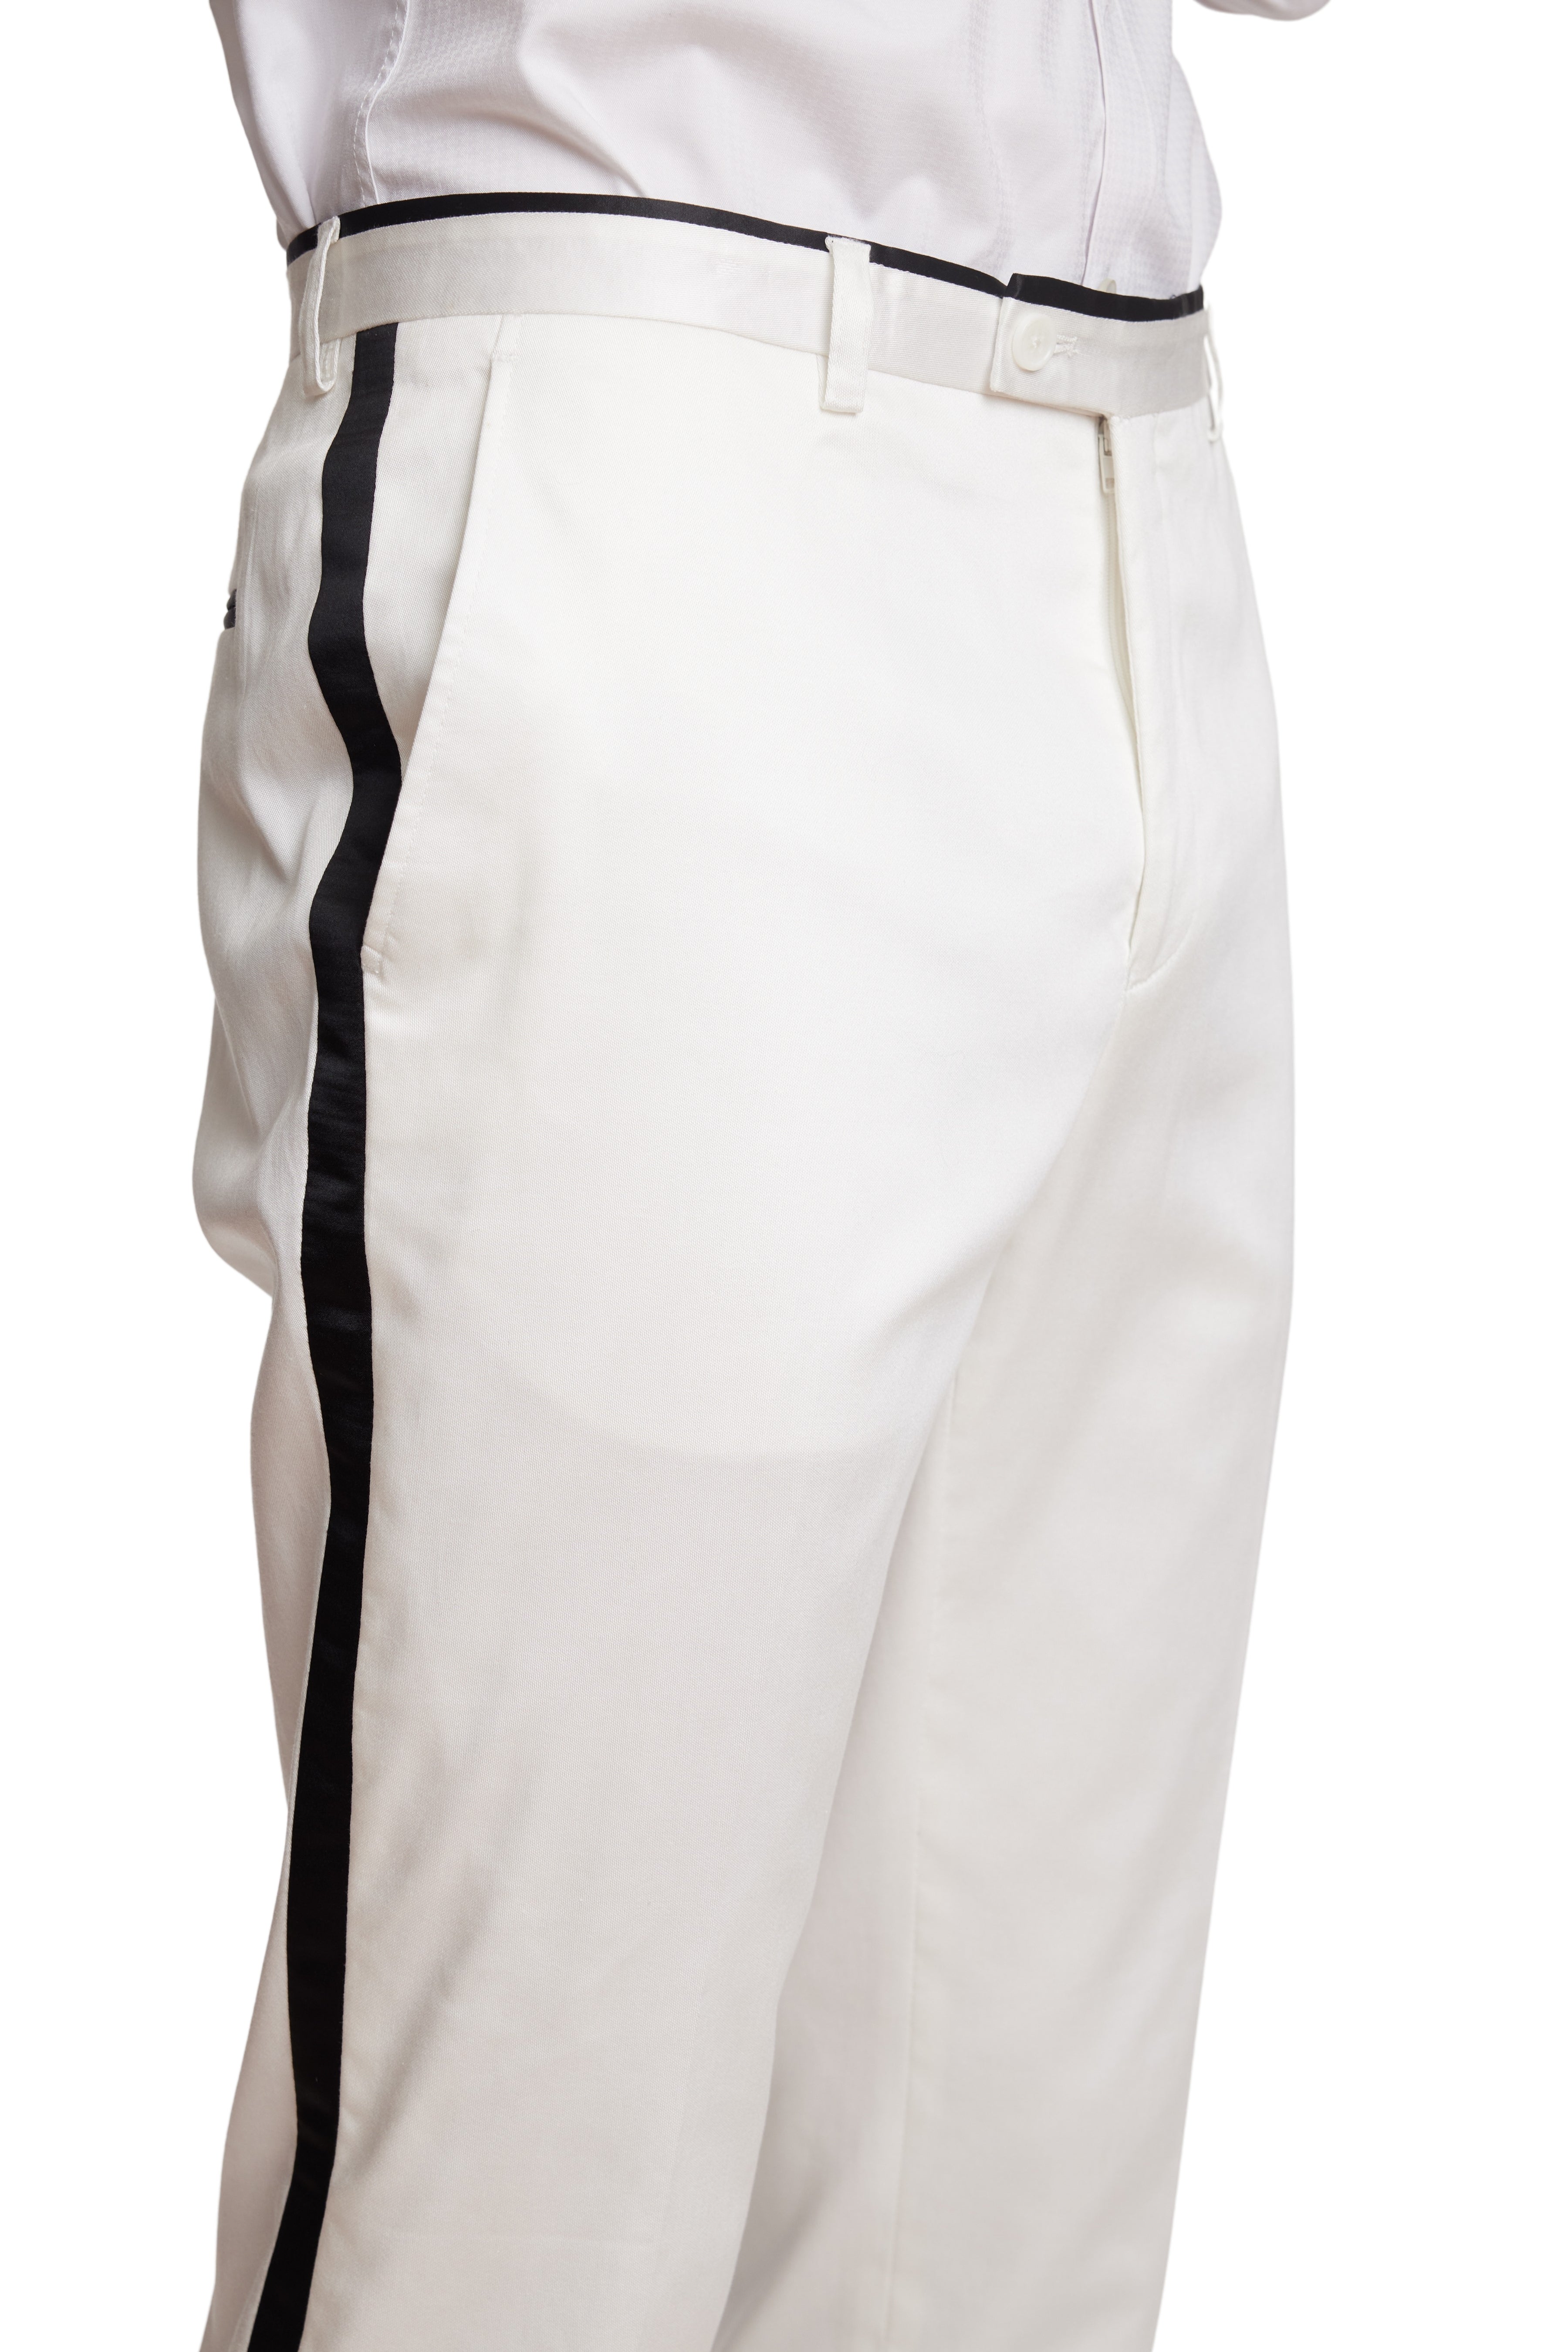 Sloane Tux Pants - slim - Soft White